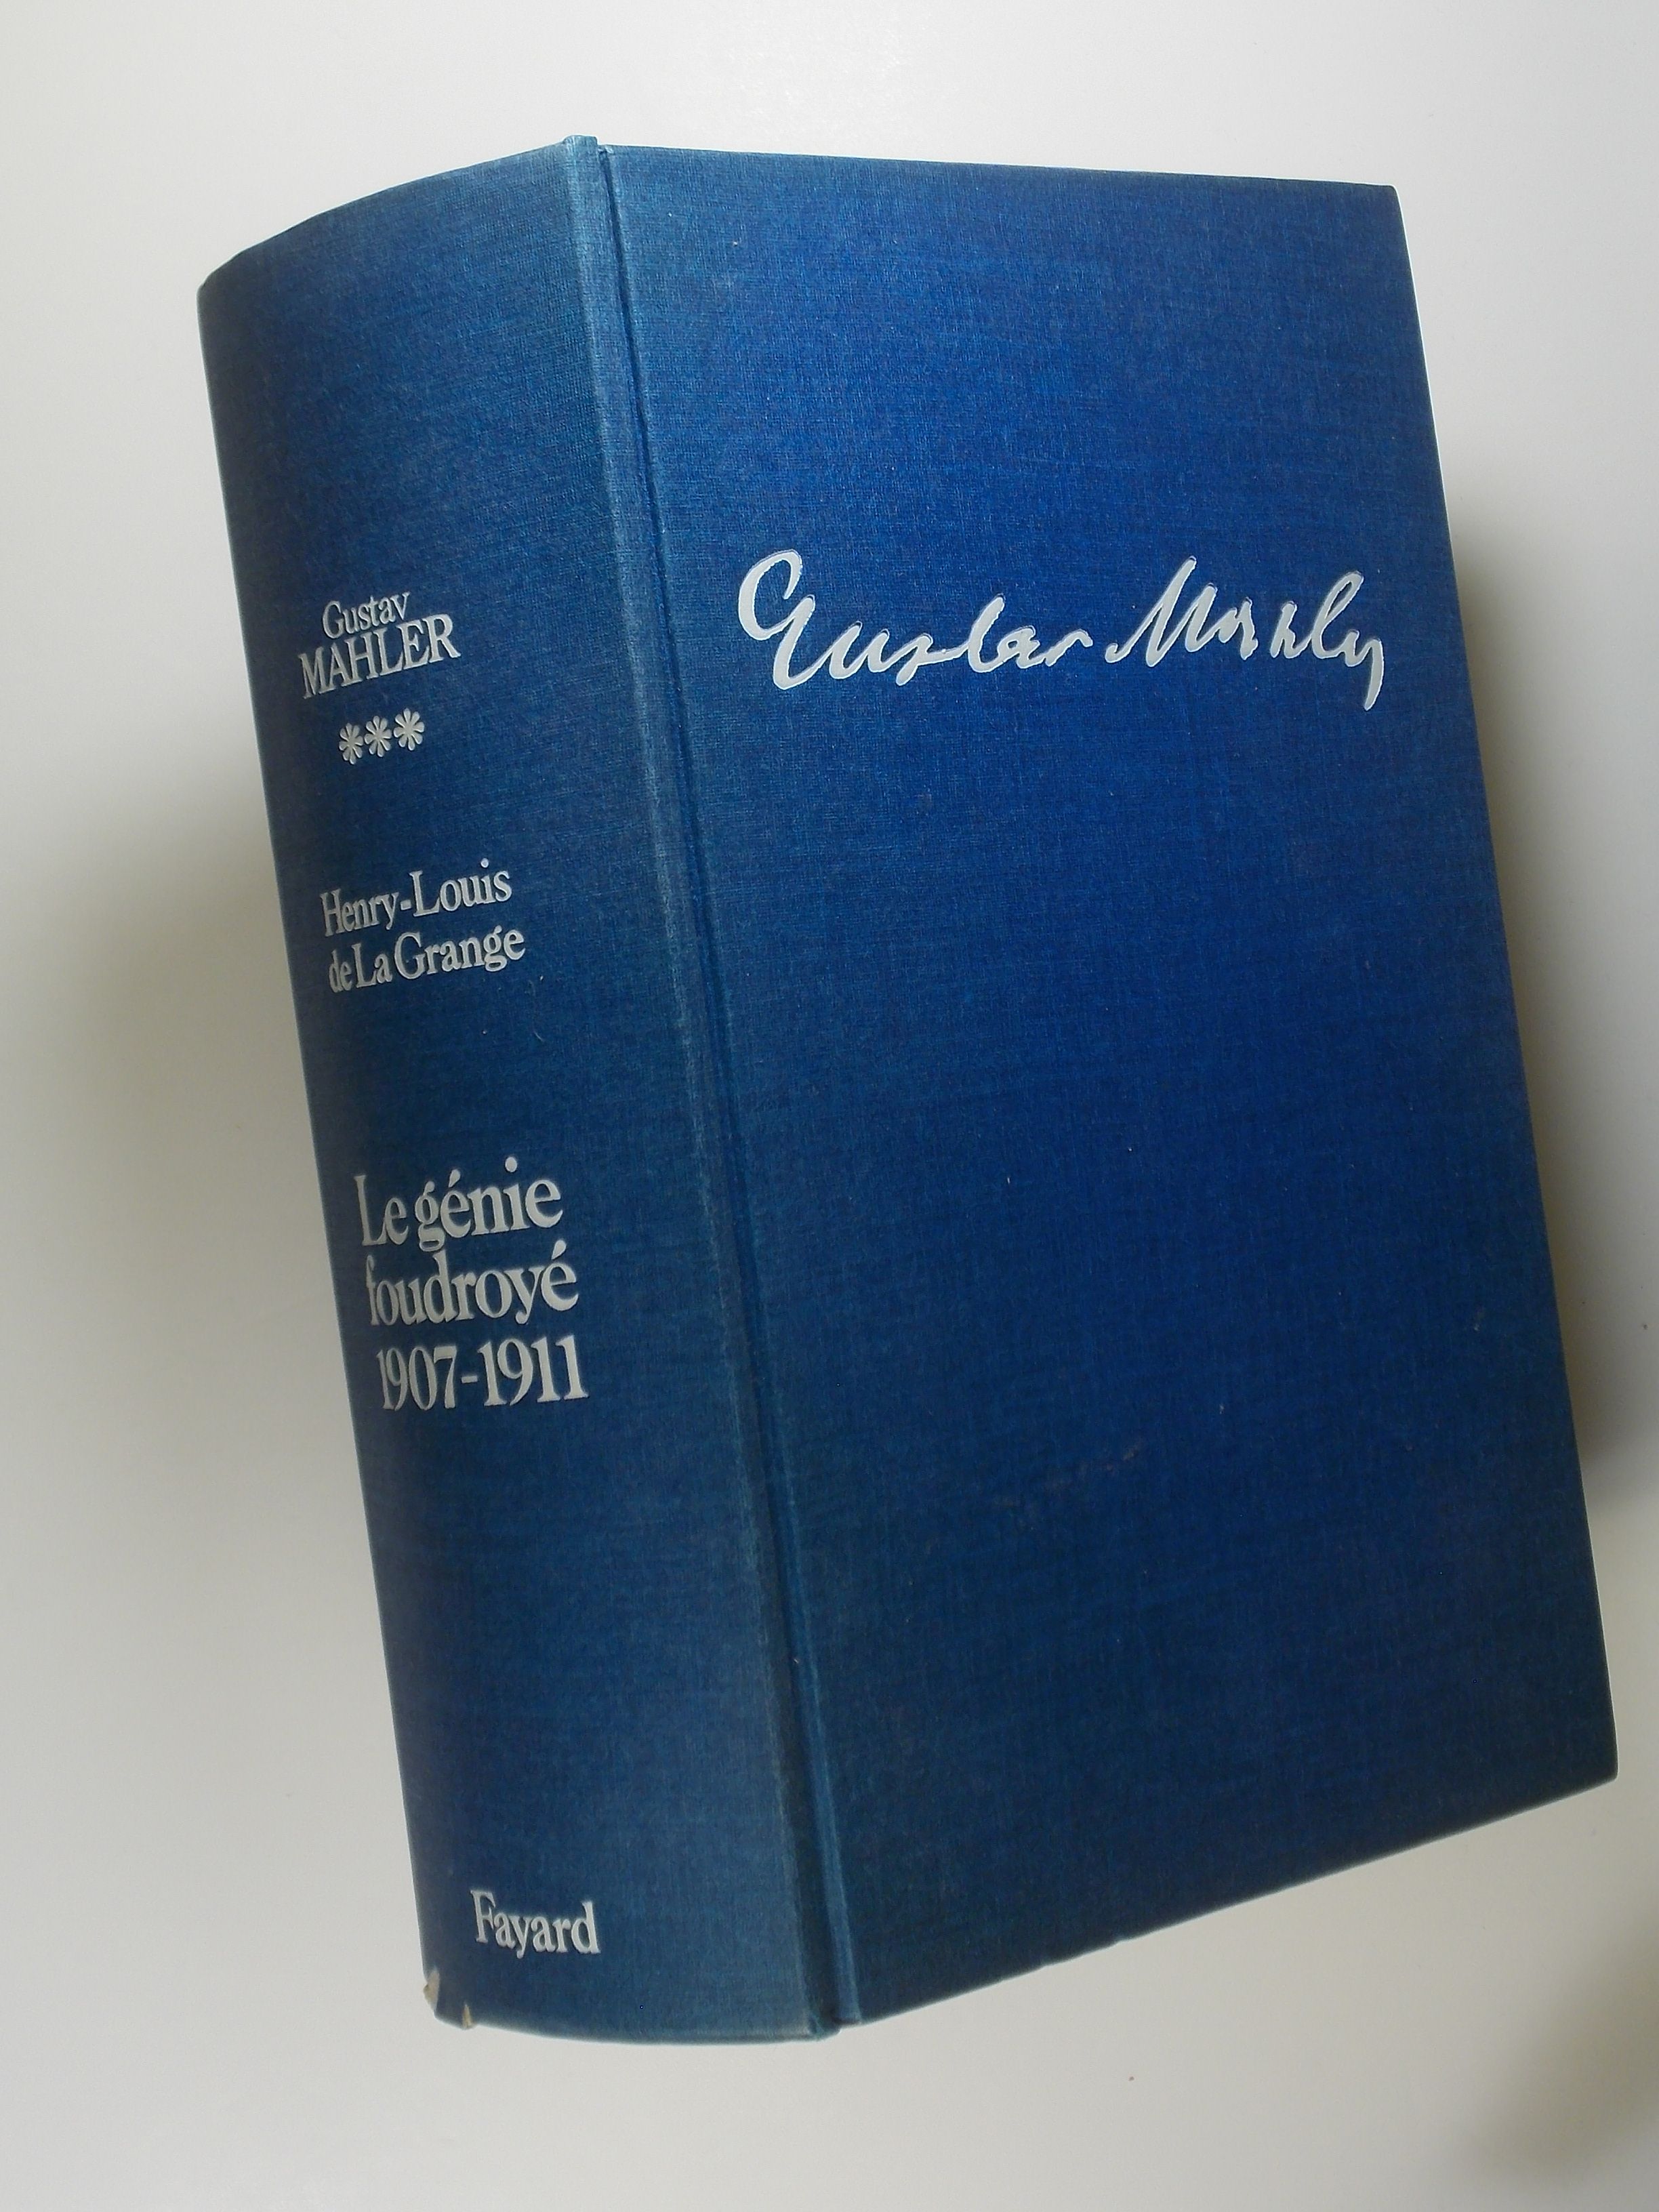 Gustav Mahler, Chronique d'une vie III (Tome 3): Le genie foudroye (1907-1911) - La Grange, Henry-Louis de